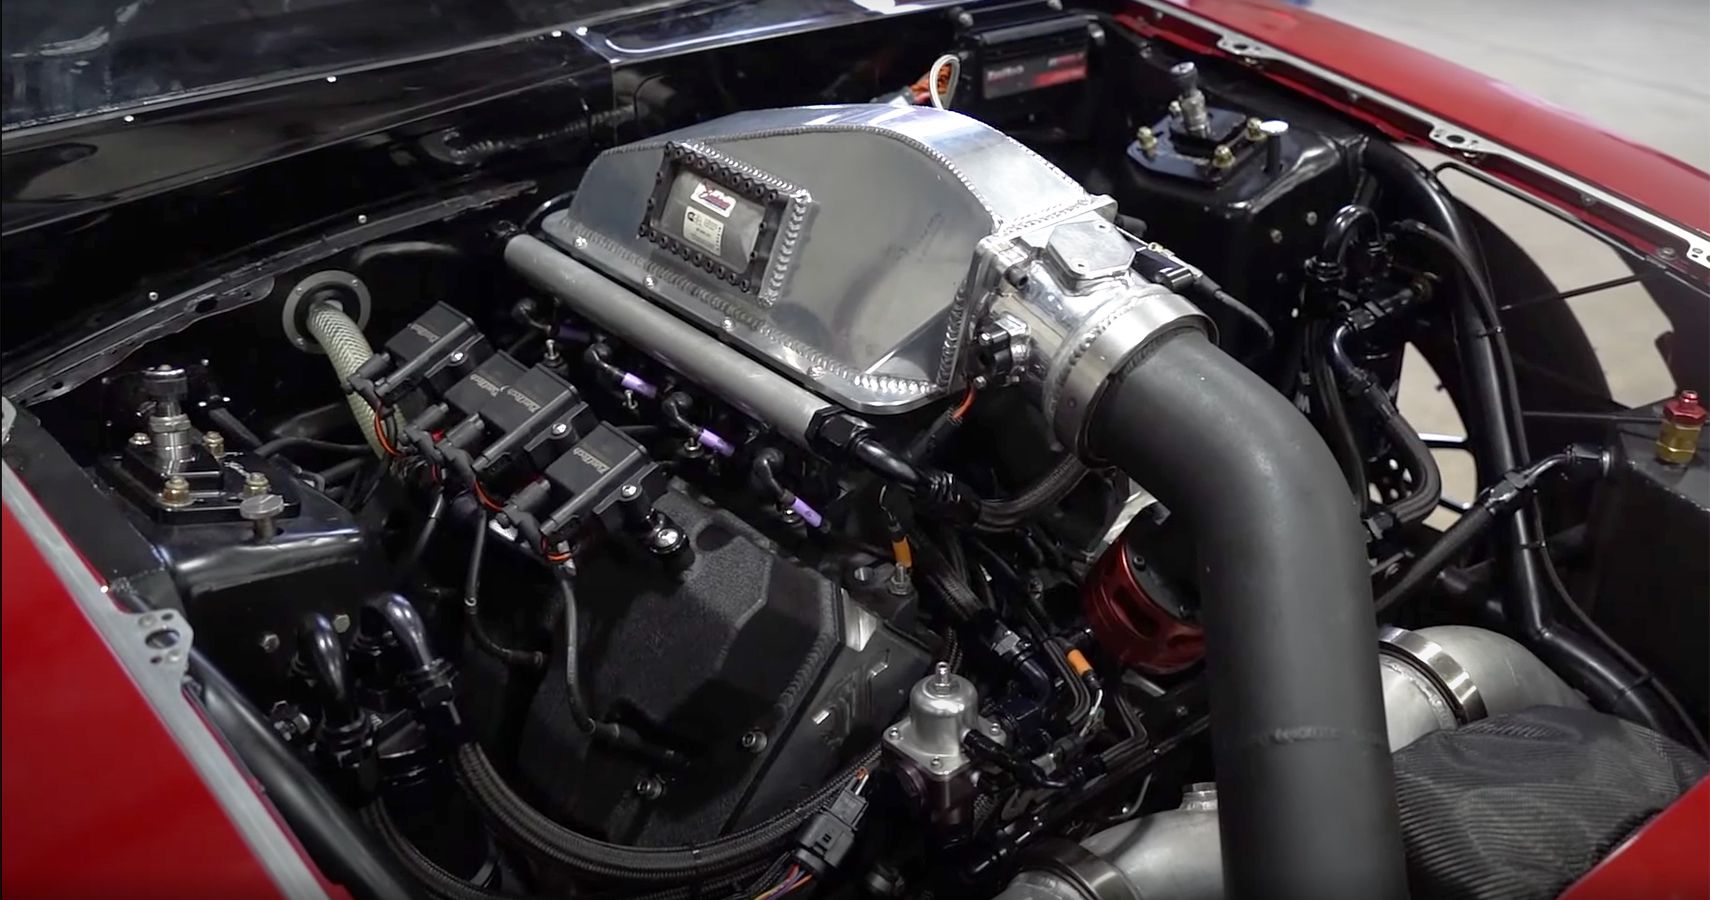 X275 Mustang GT engine setup